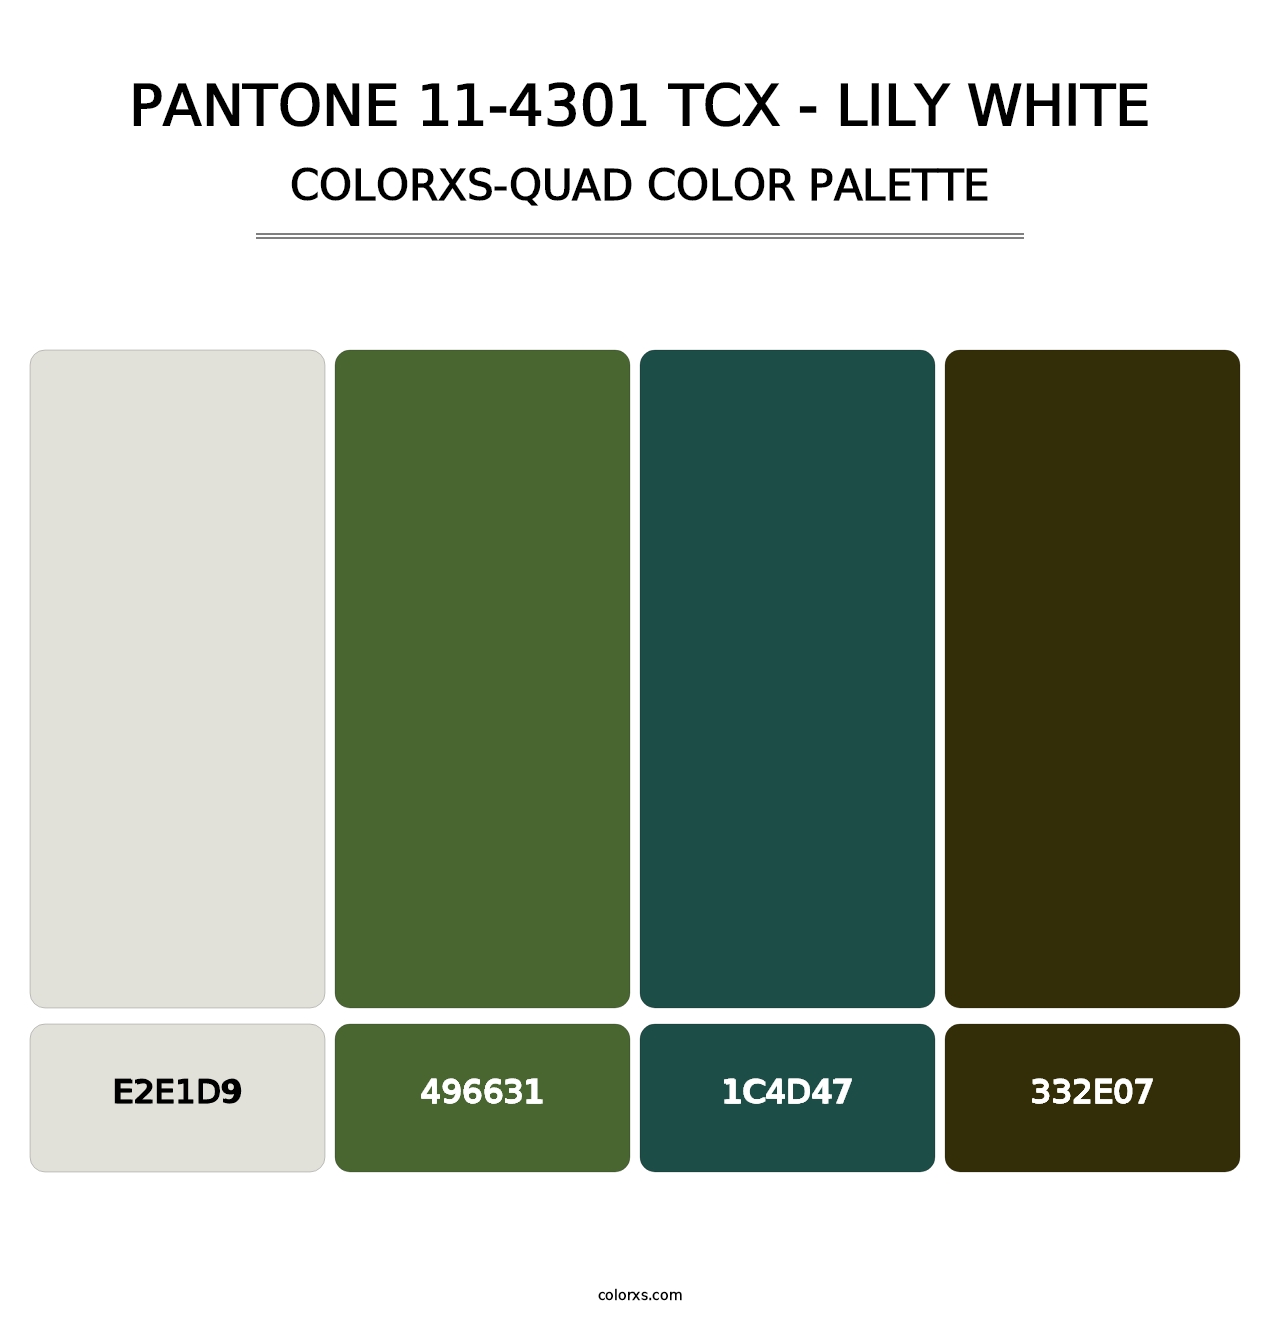 PANTONE 11-4301 TCX - Lily White - Colorxs Quad Palette